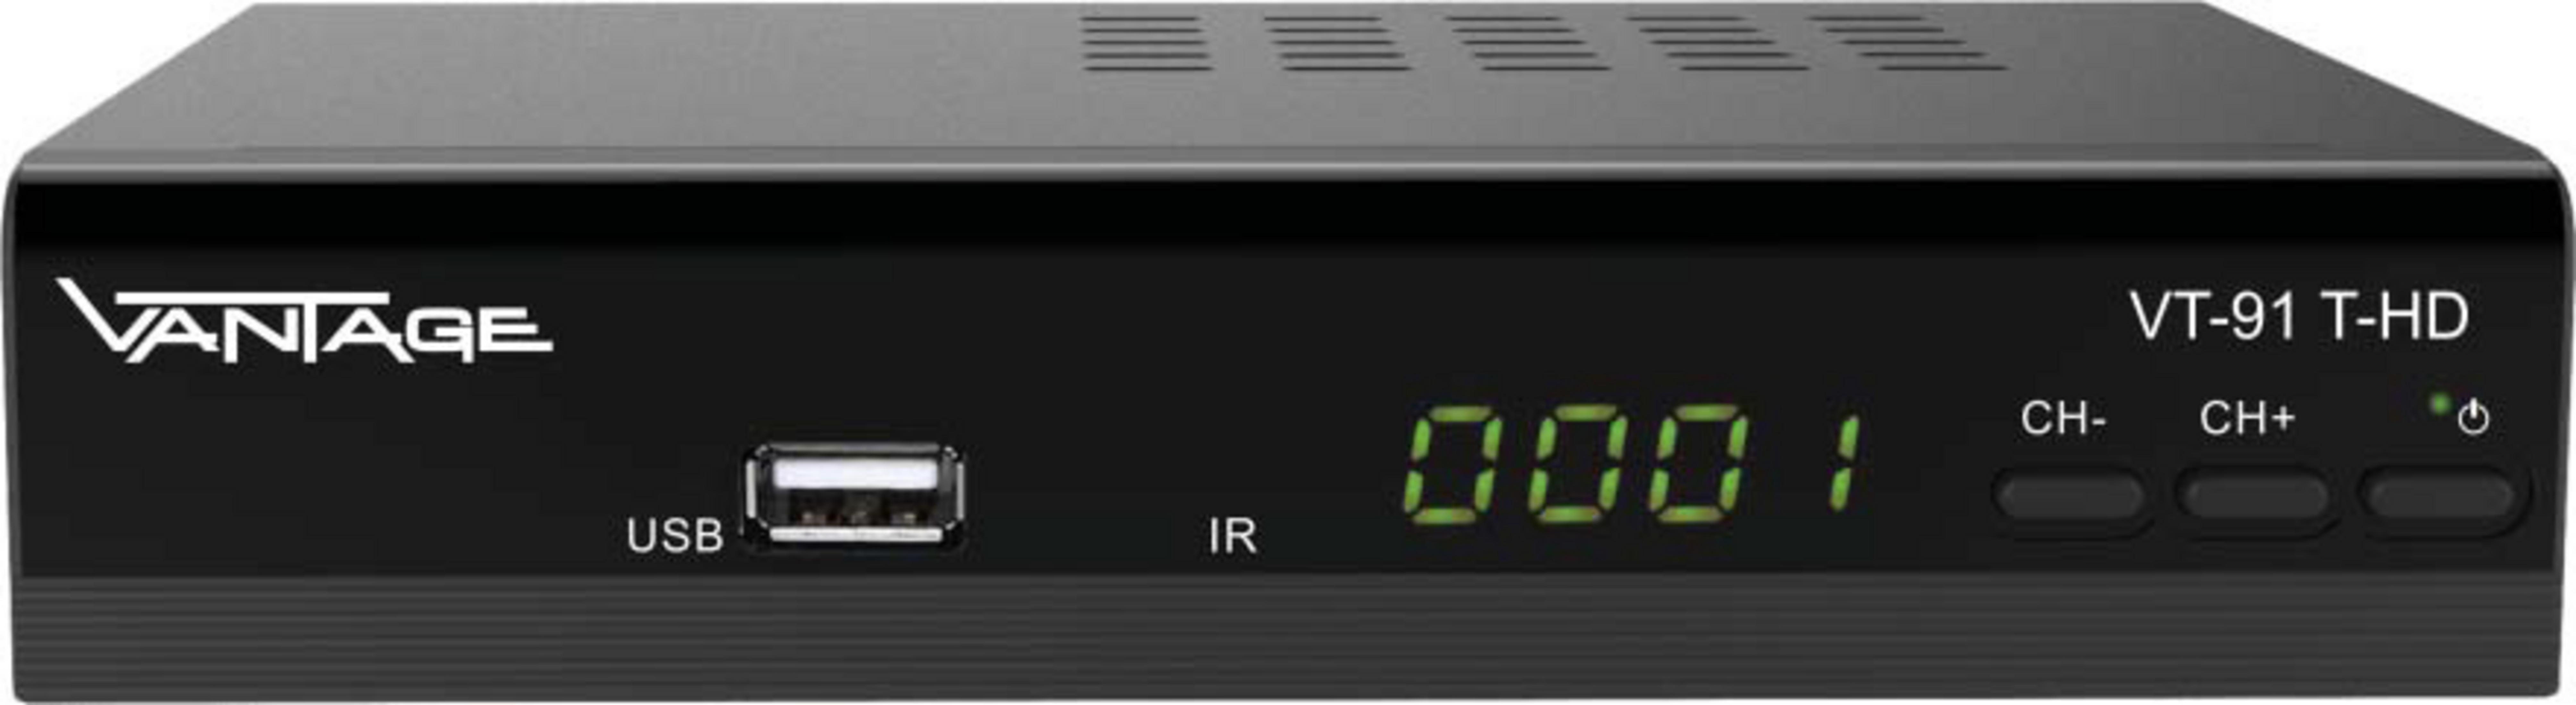 Schwarz) (H.265), 91 T-HD DVB-T2 VANTAGE DVB-T, DVB-T2 (HDTV, Receiver HD VT